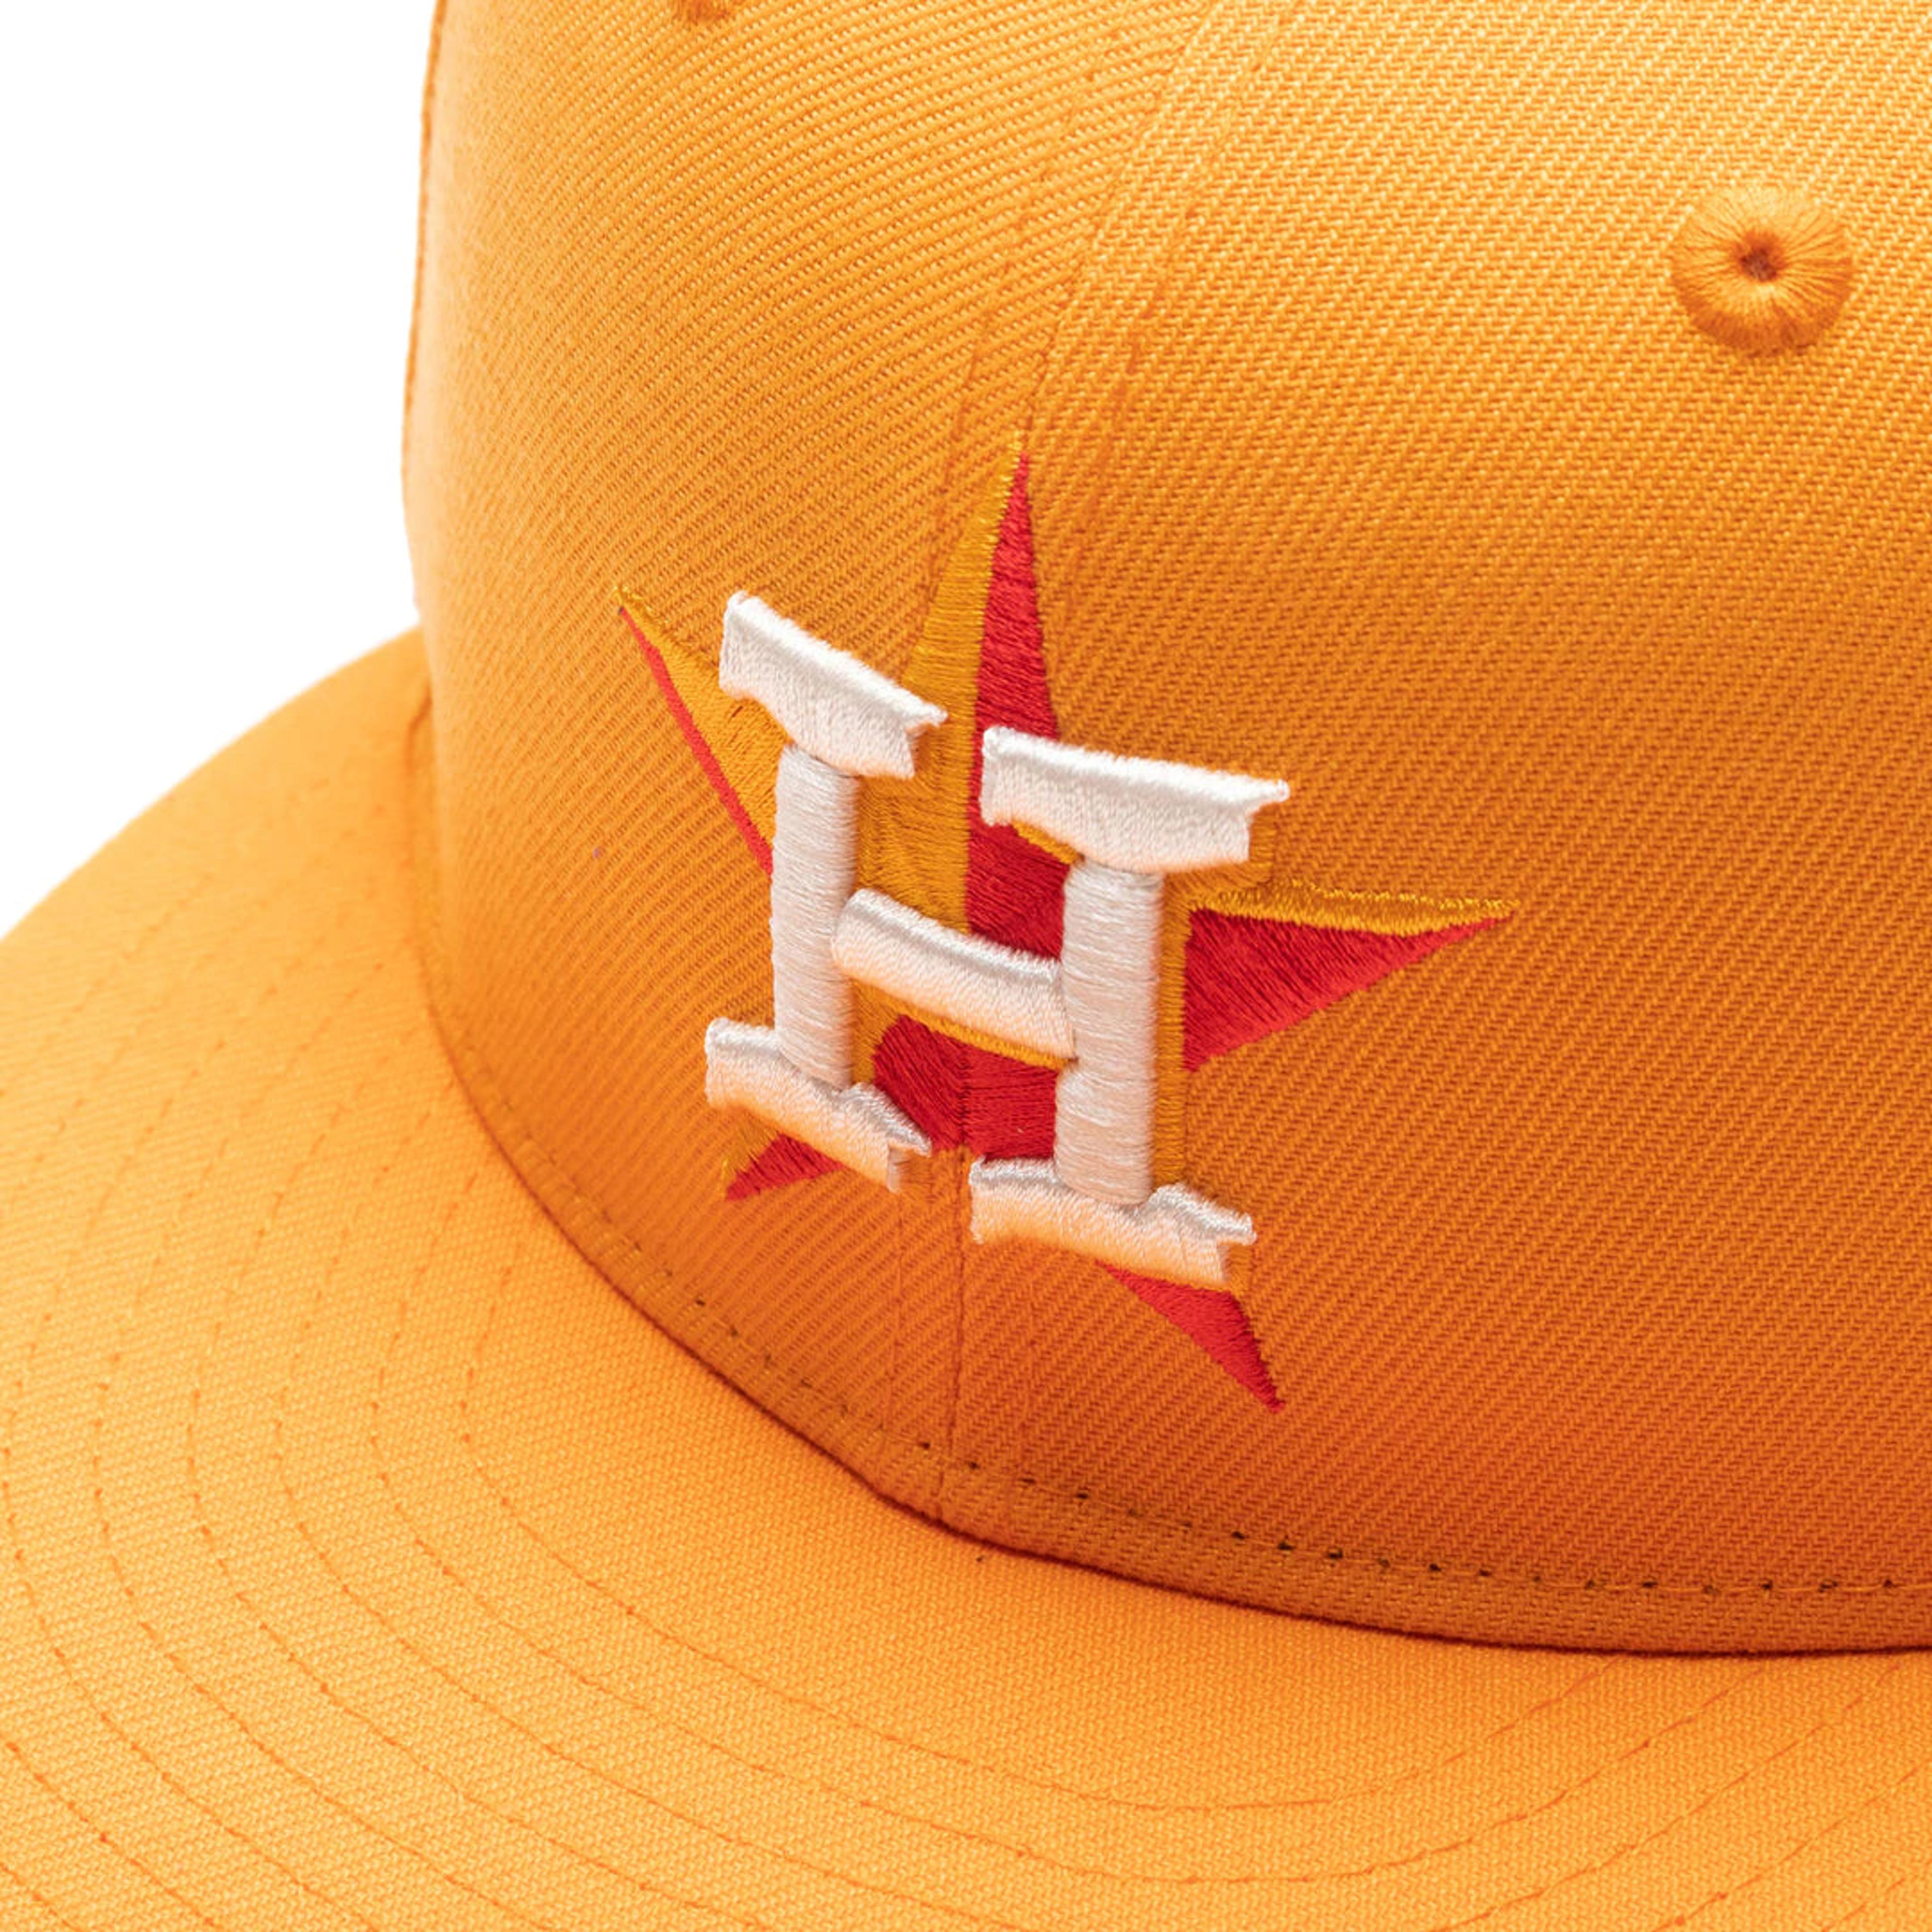 Houston Astros New Era 5950 Fitted Hat - Alt 2 - Orange